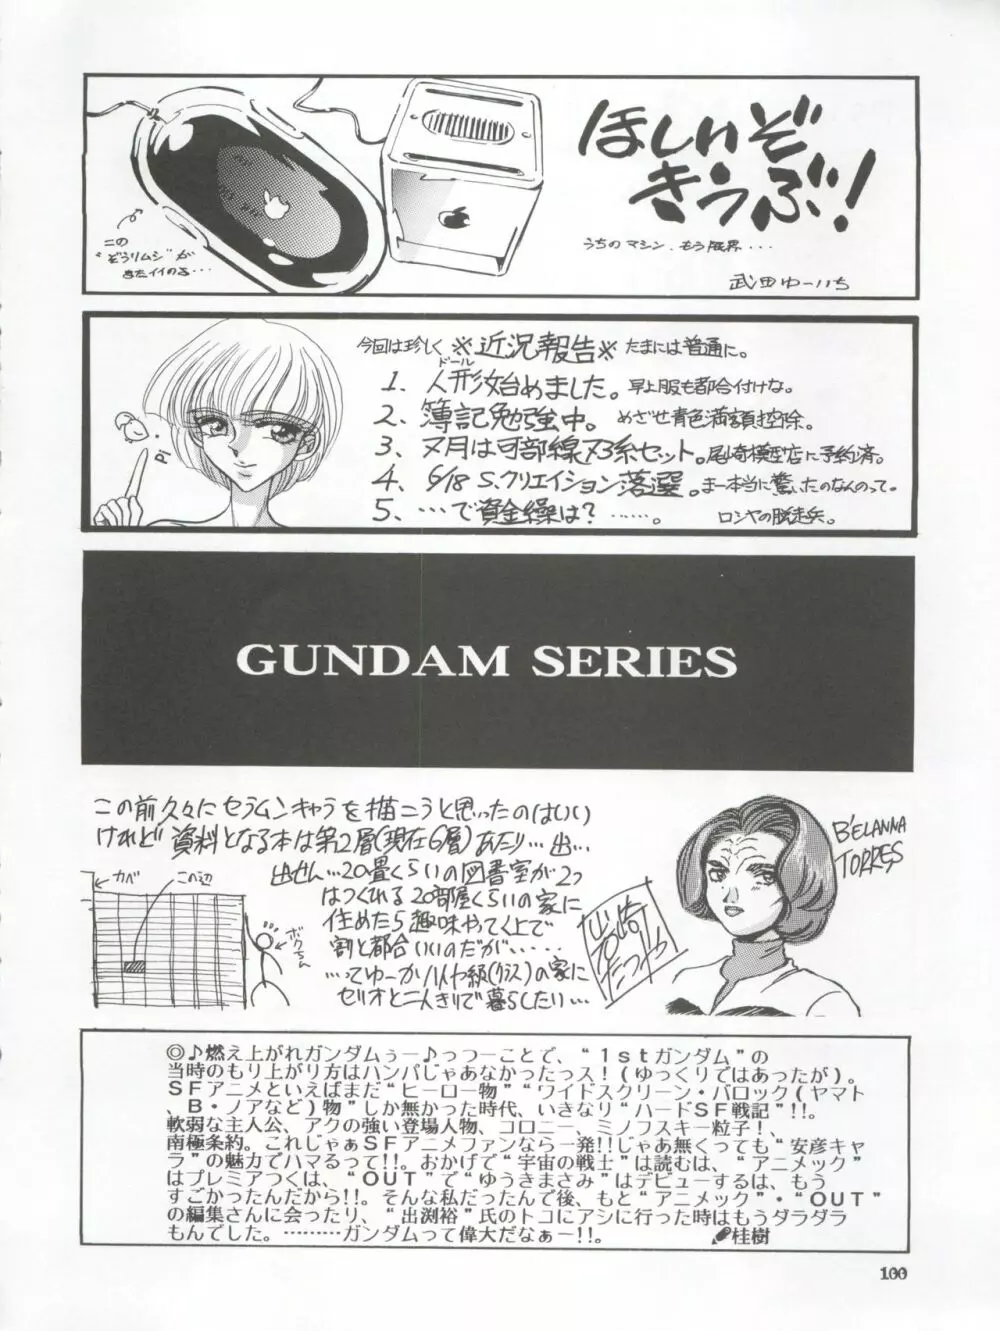 NEXT Climax Magazine 3 Gundam Series - page100